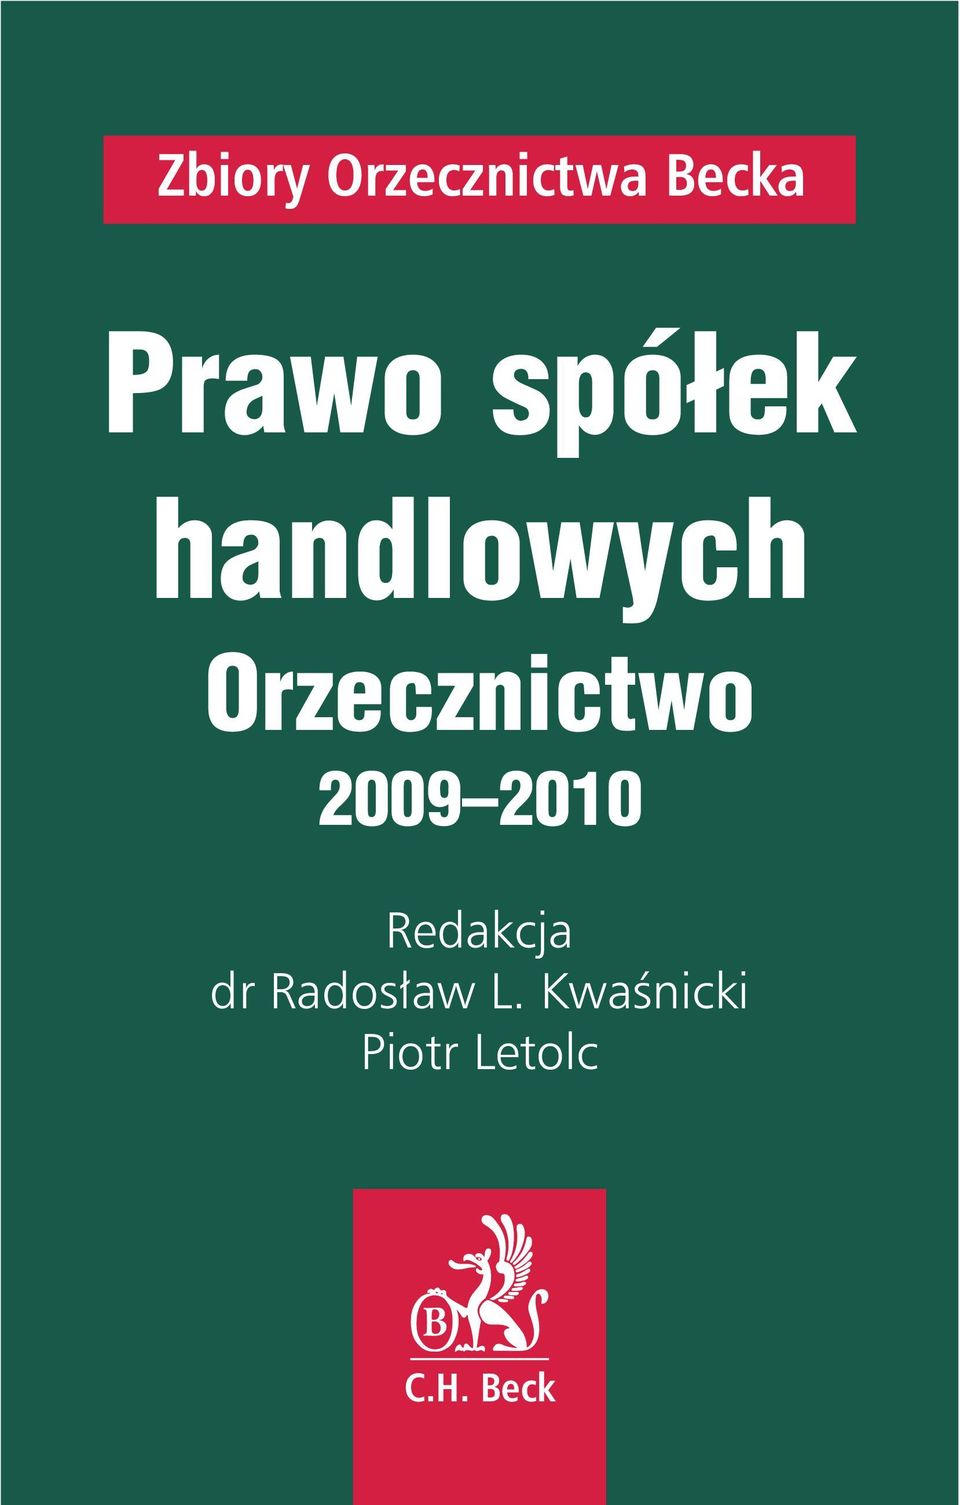 2009 2010 Redakcja dr Radosław L.